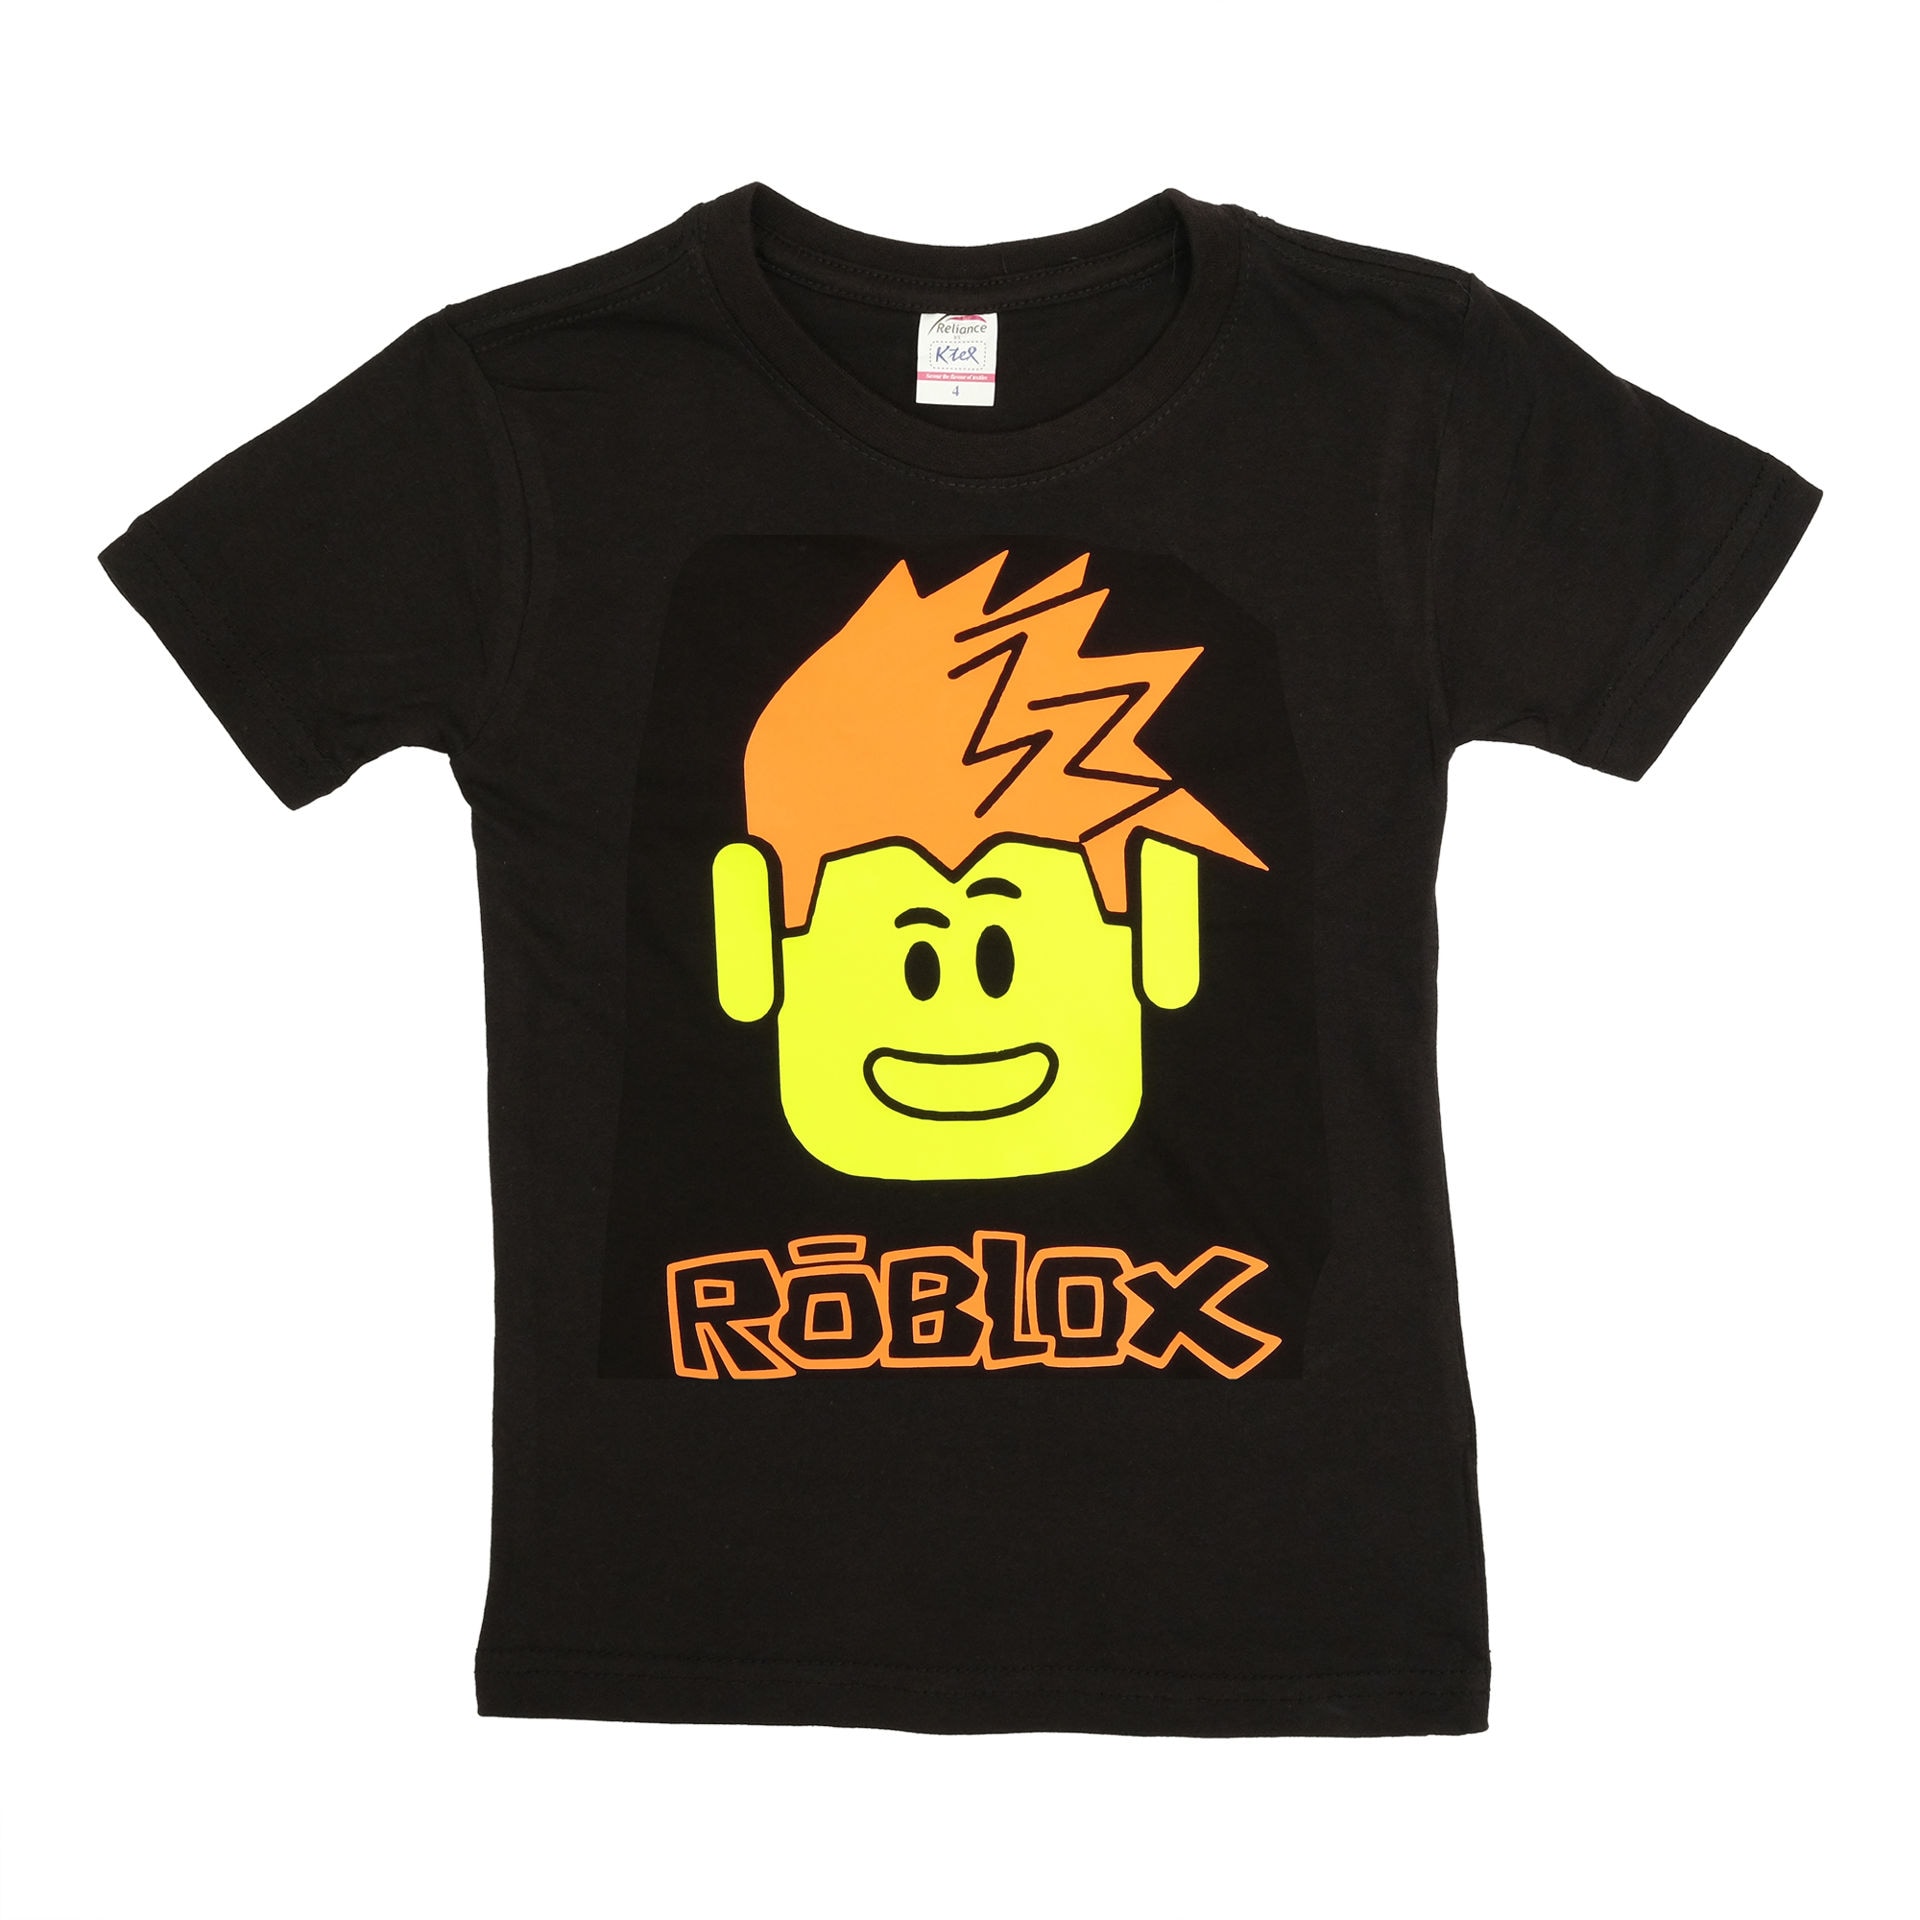 roblox t-shirt for boys kids.roblox shirt round neck..